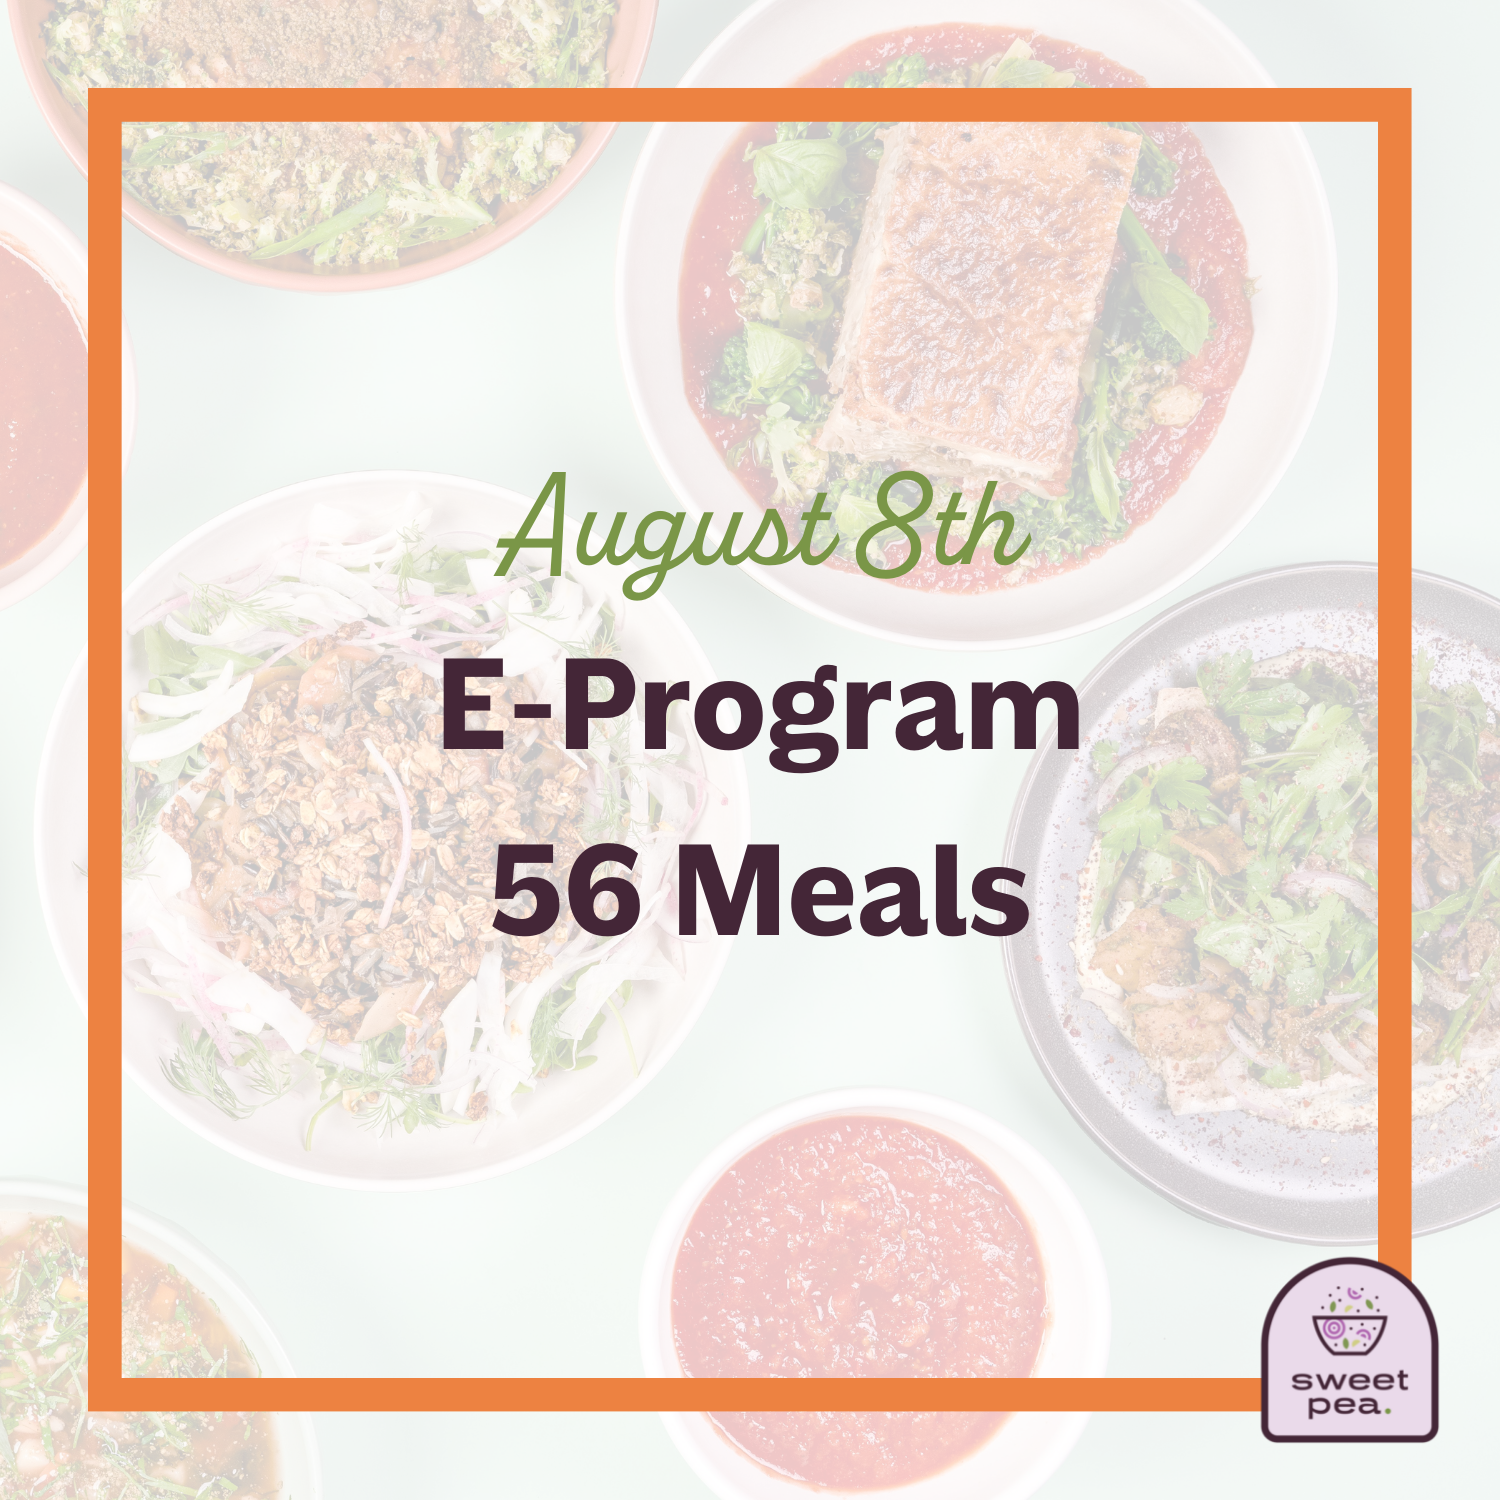 E-Program: 56 Meals (August)